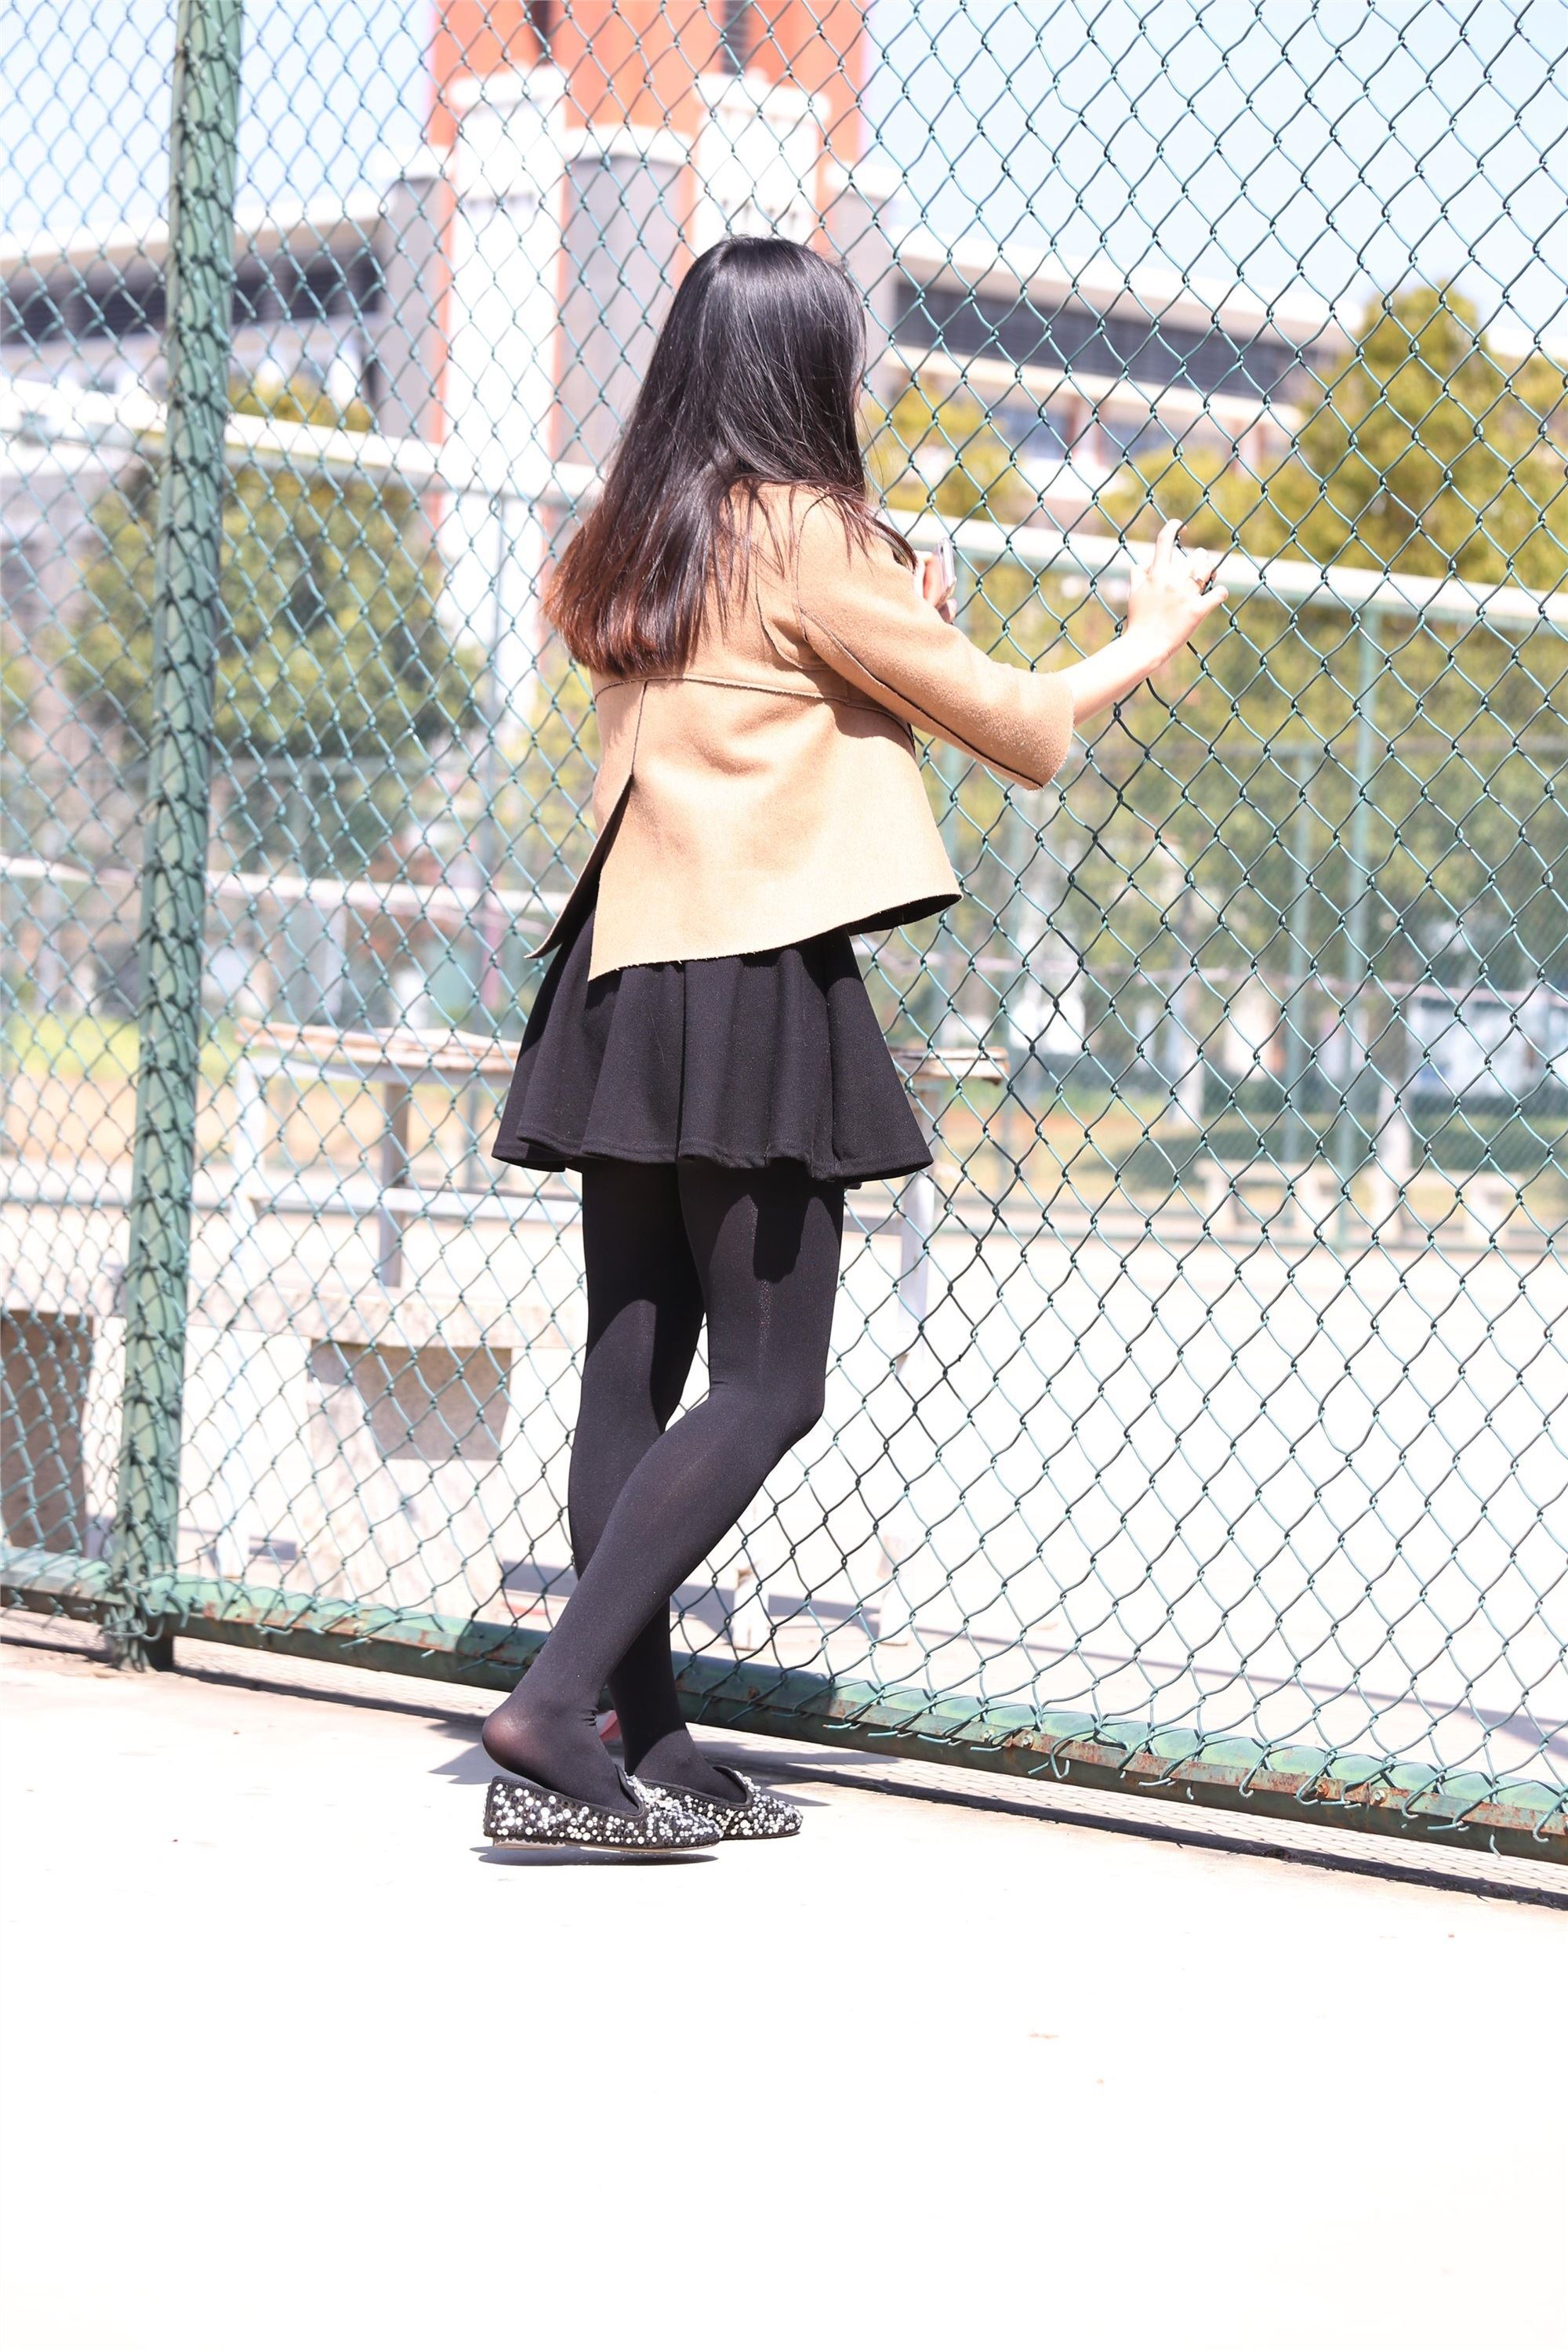 W015 dancer 5 - Playground Shuangshu 21